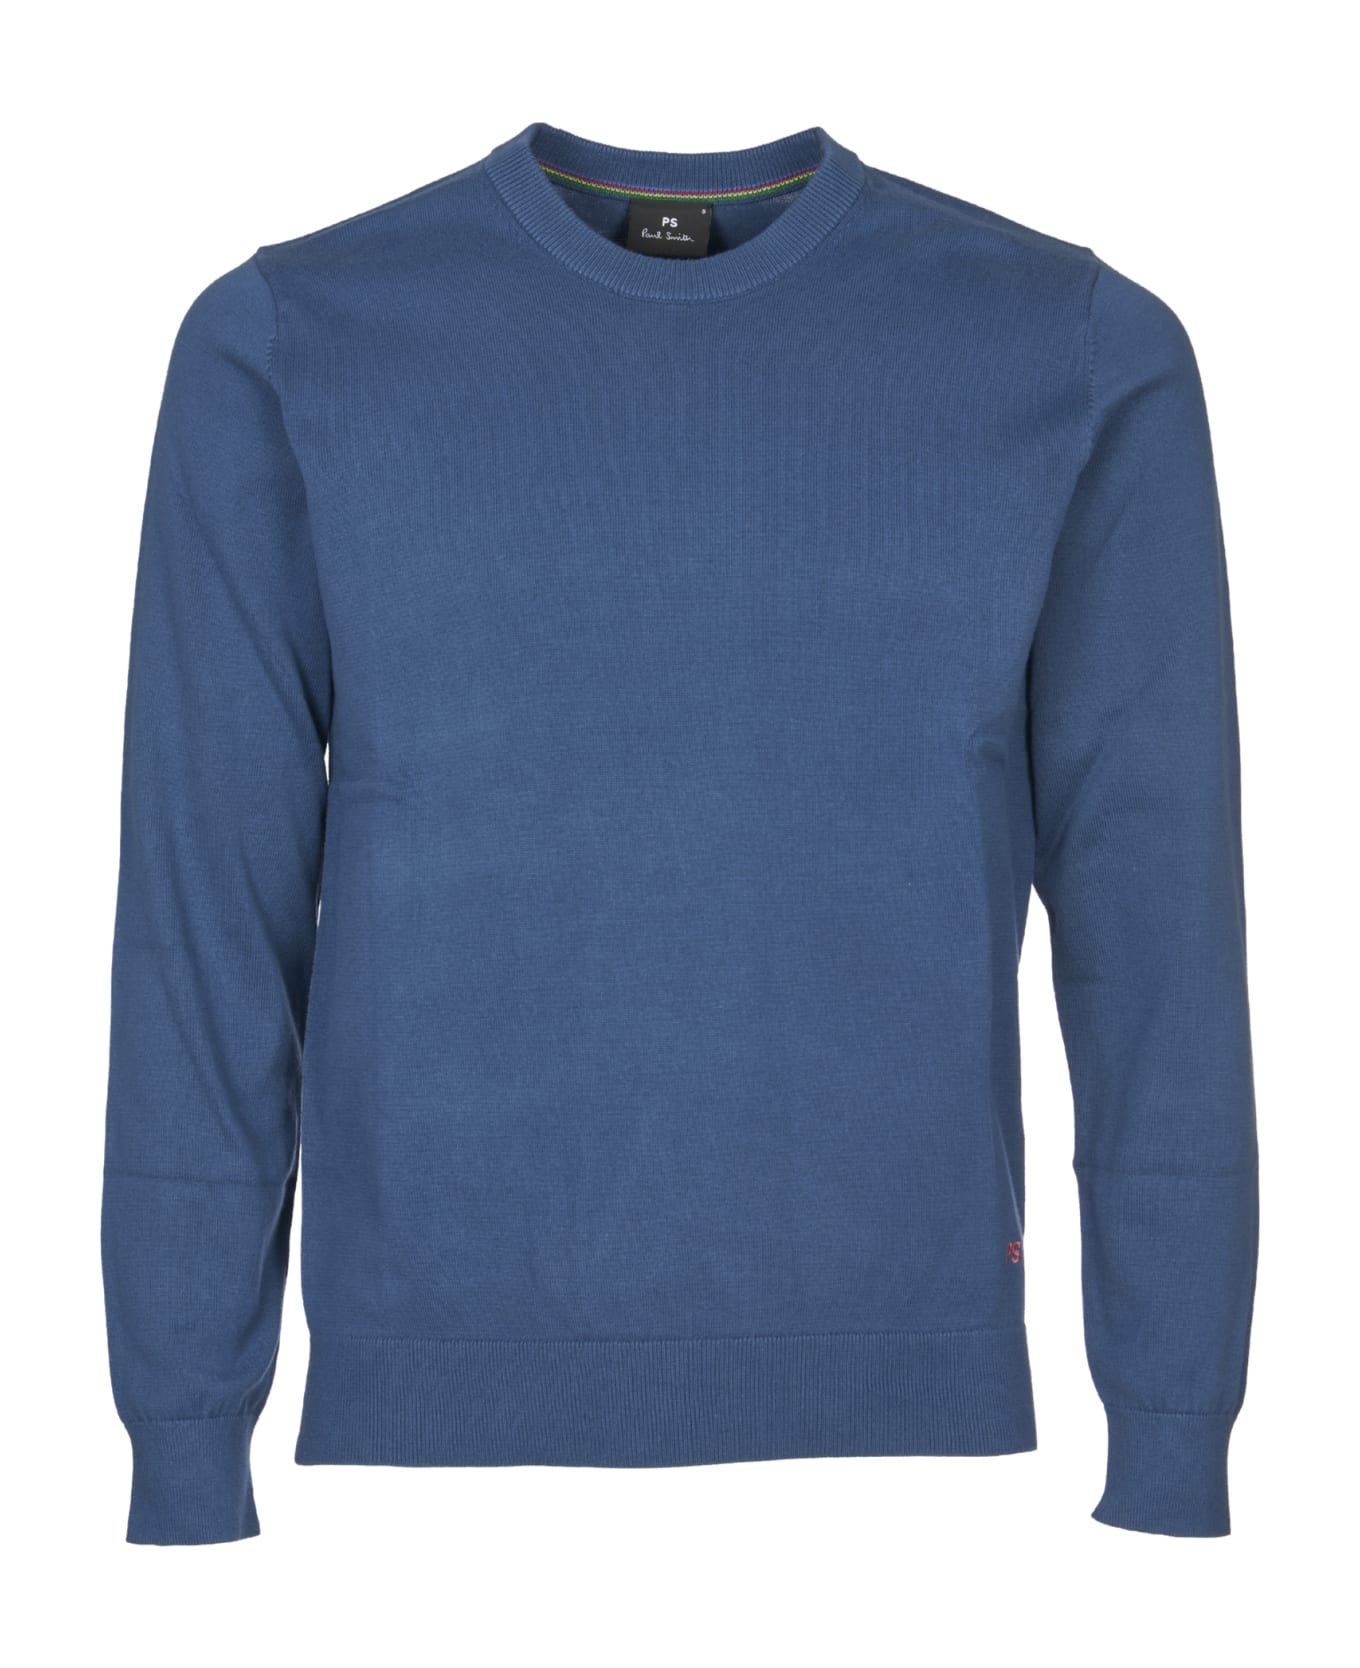 Paul Smith Sweater - Blue ニットウェア